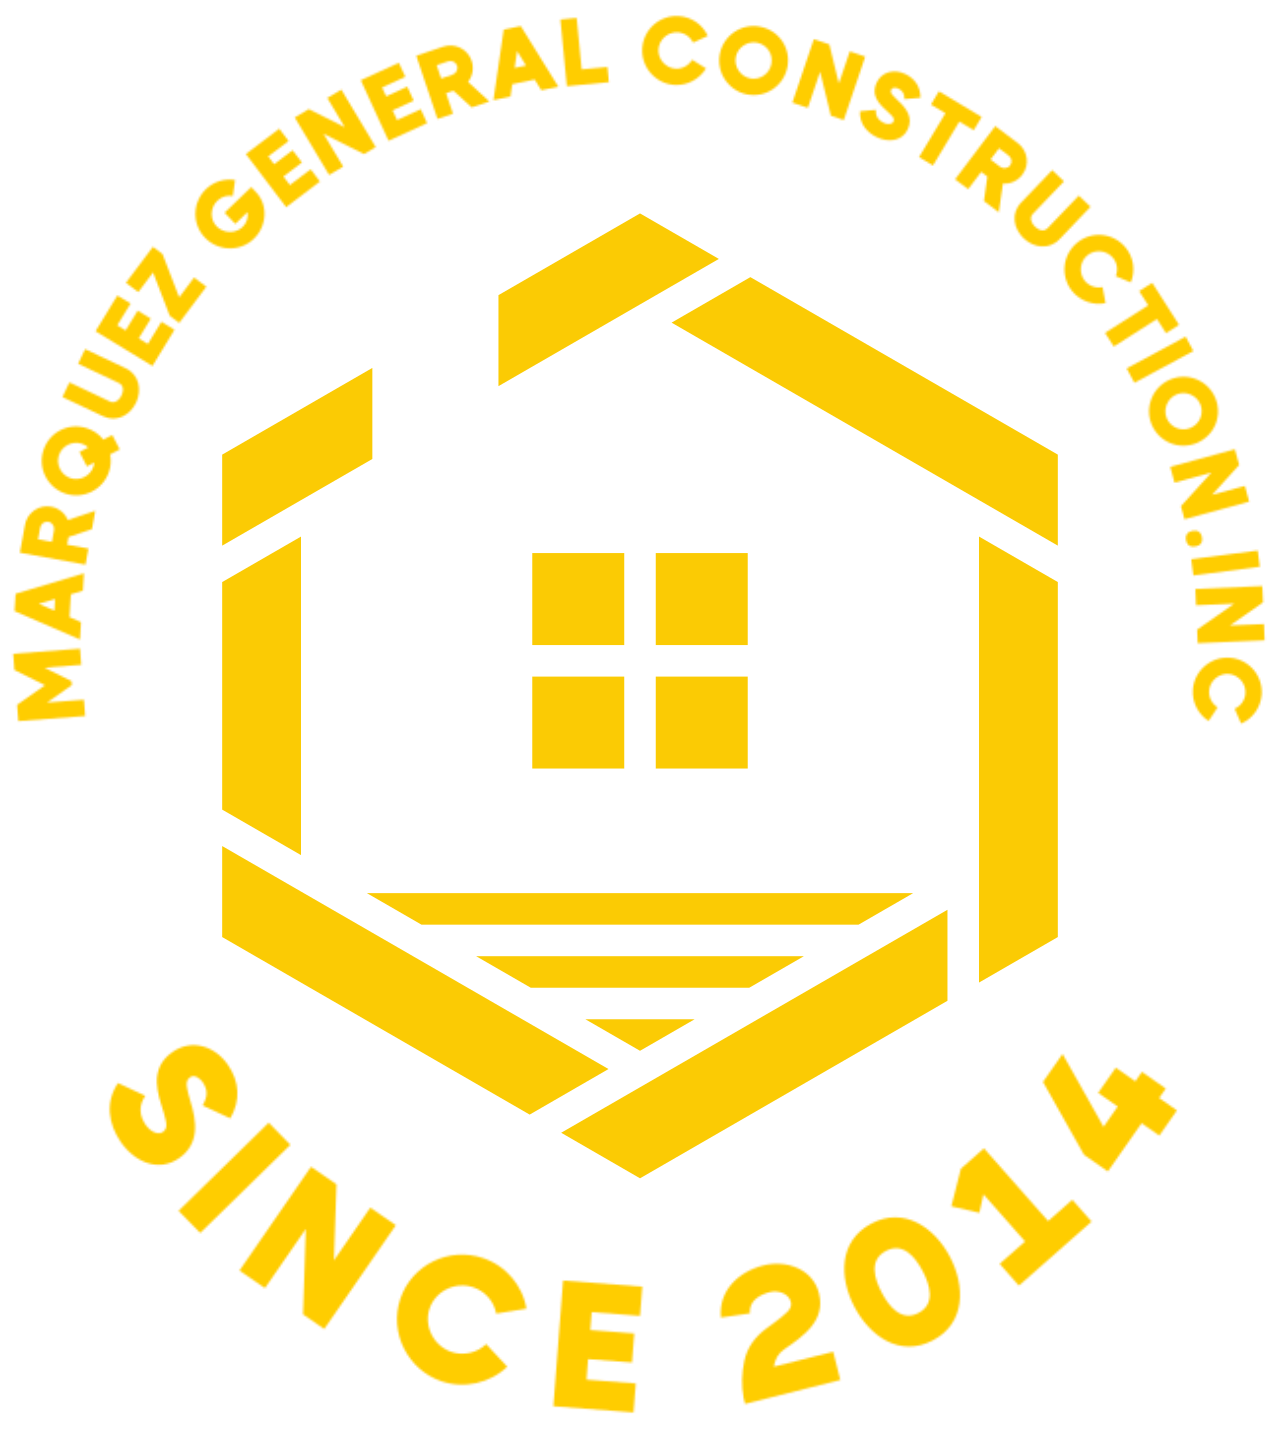 Marquez general construction.inc's logo